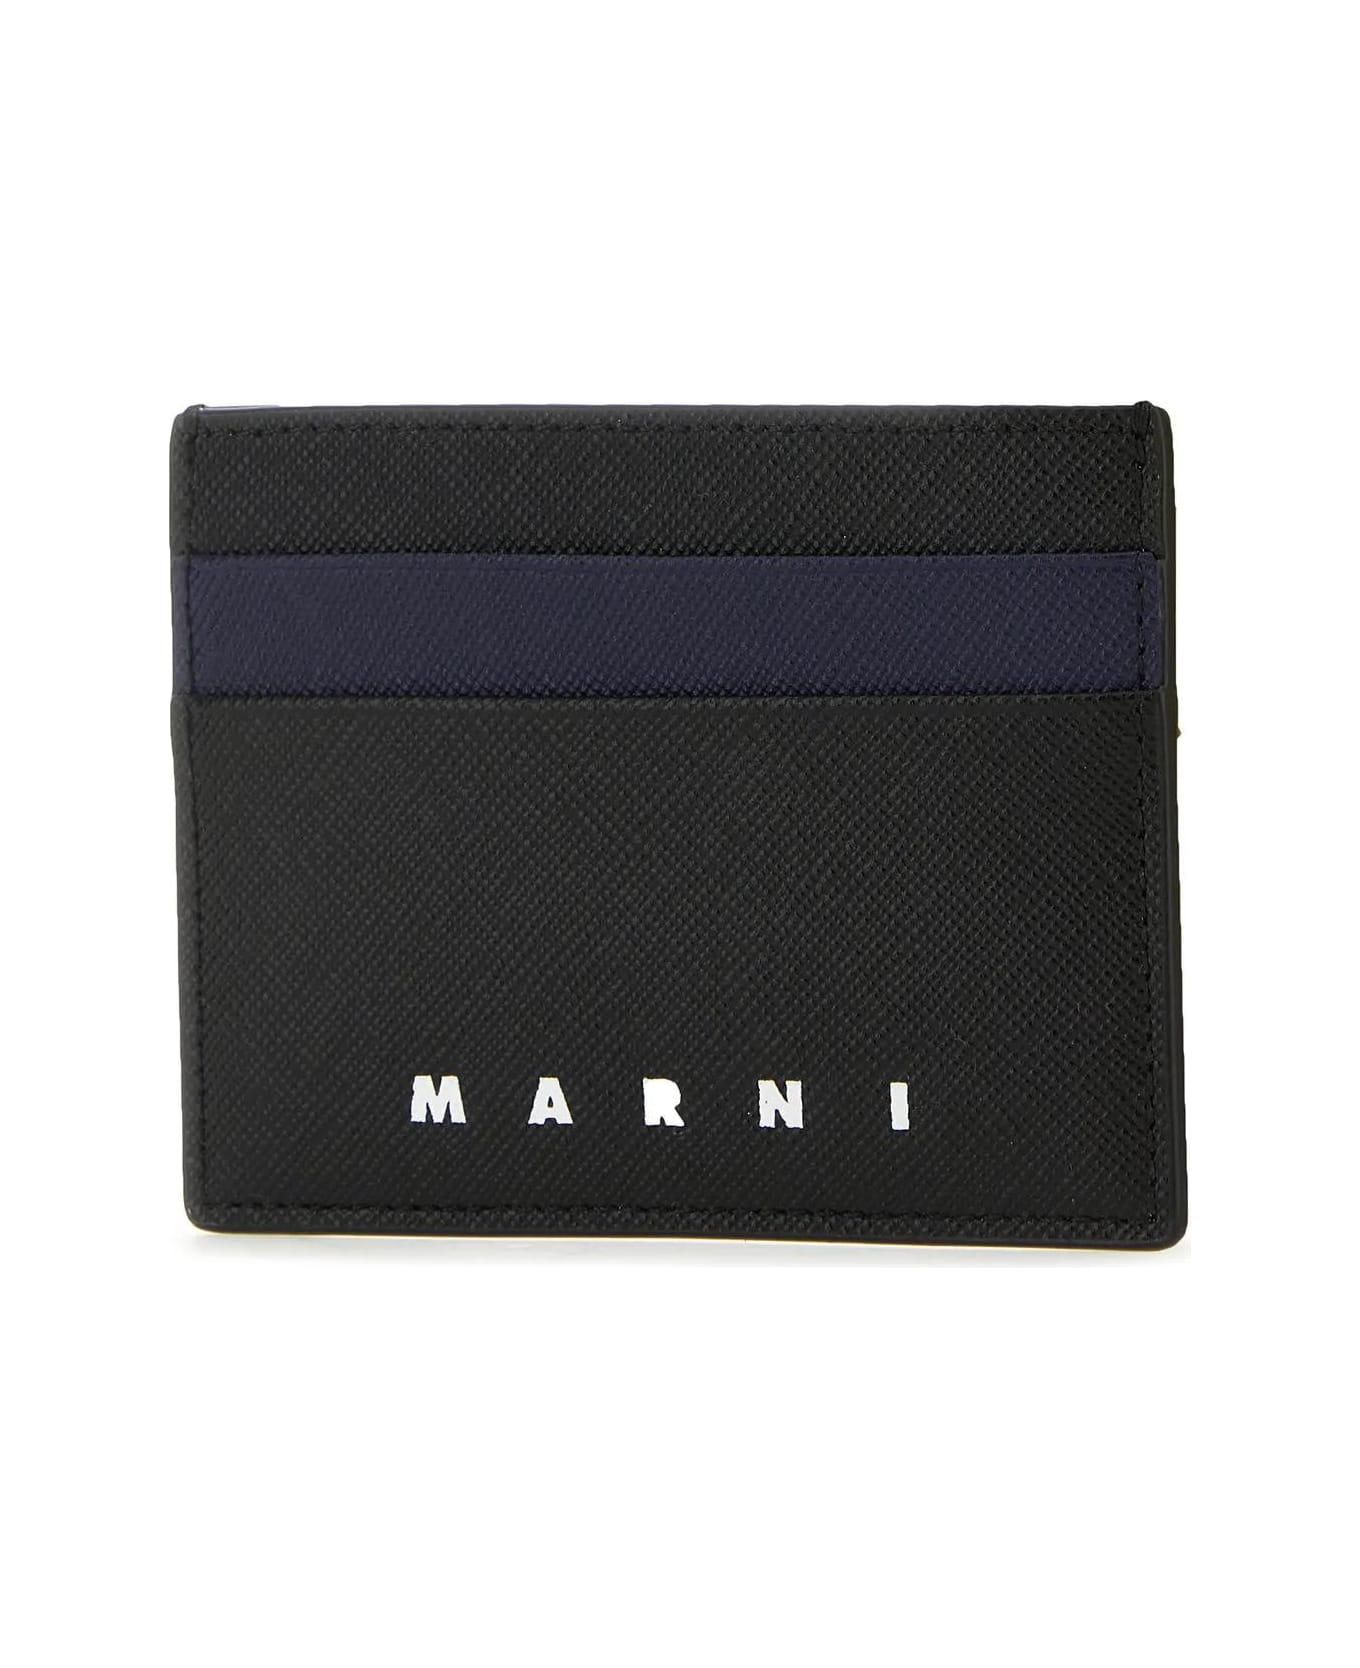 Marni Black Leather Card Holder - Z576N 財布